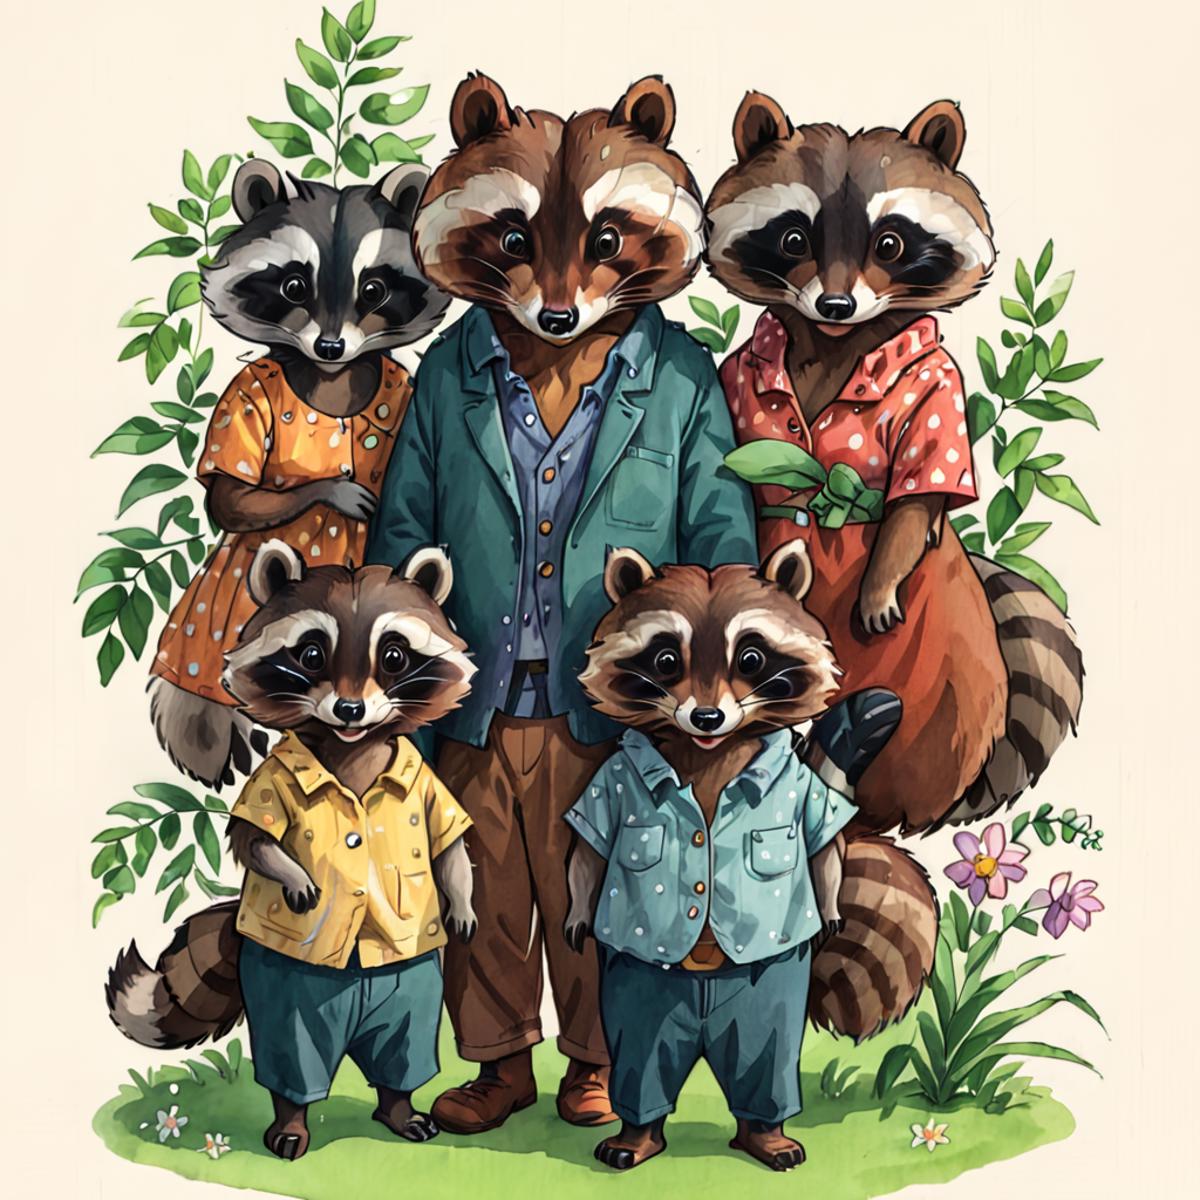 Children's book illustration by Genrih Valk (XL) image by TikFesku